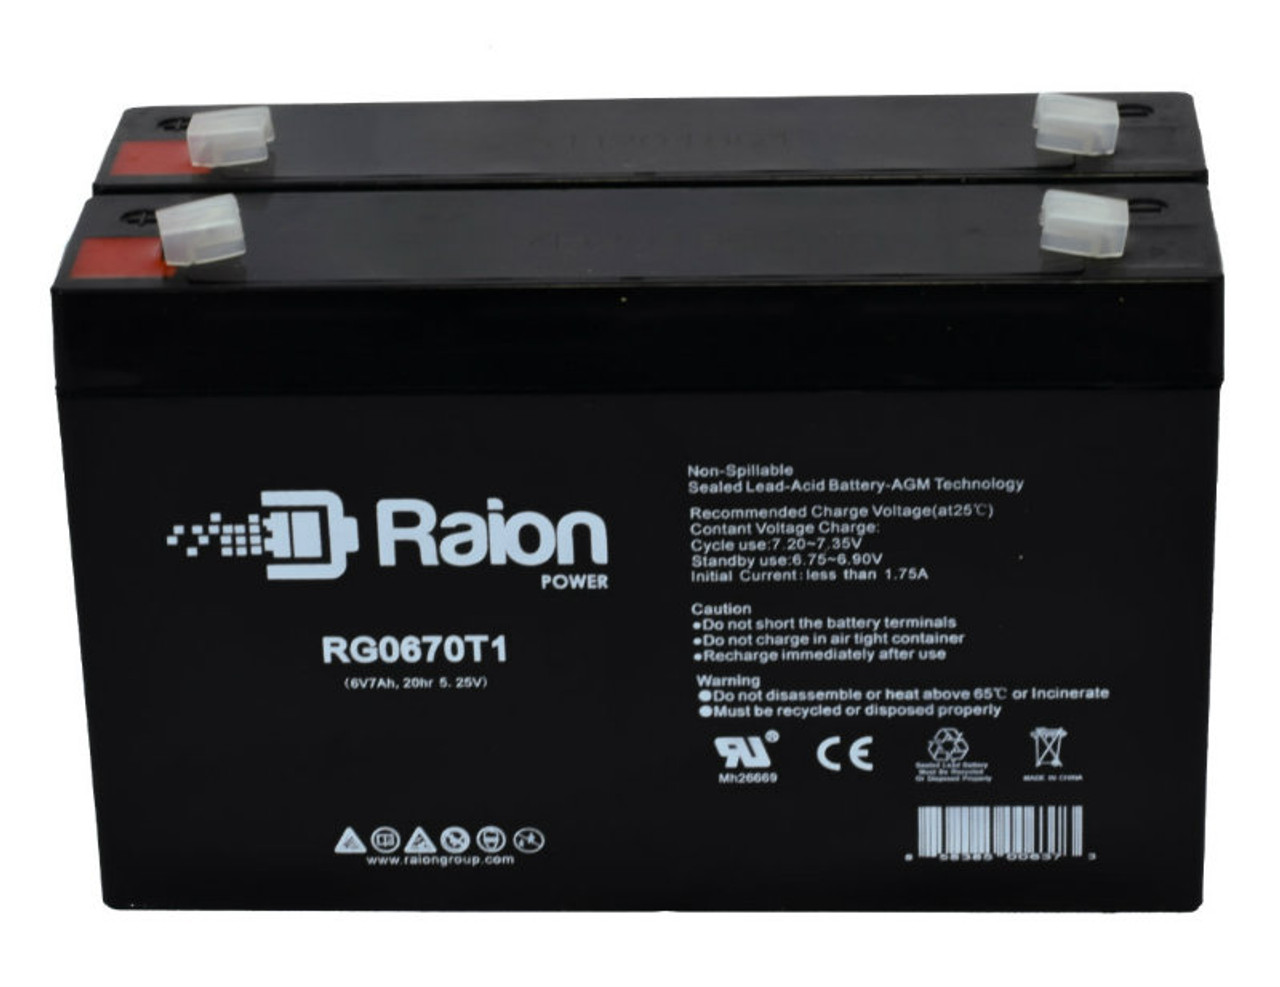 Raion Power RG0670T1 6V 7Ah Replacement Emergency Light Battery for Light Alarms 2PG1/L9MHV - 2 Pack